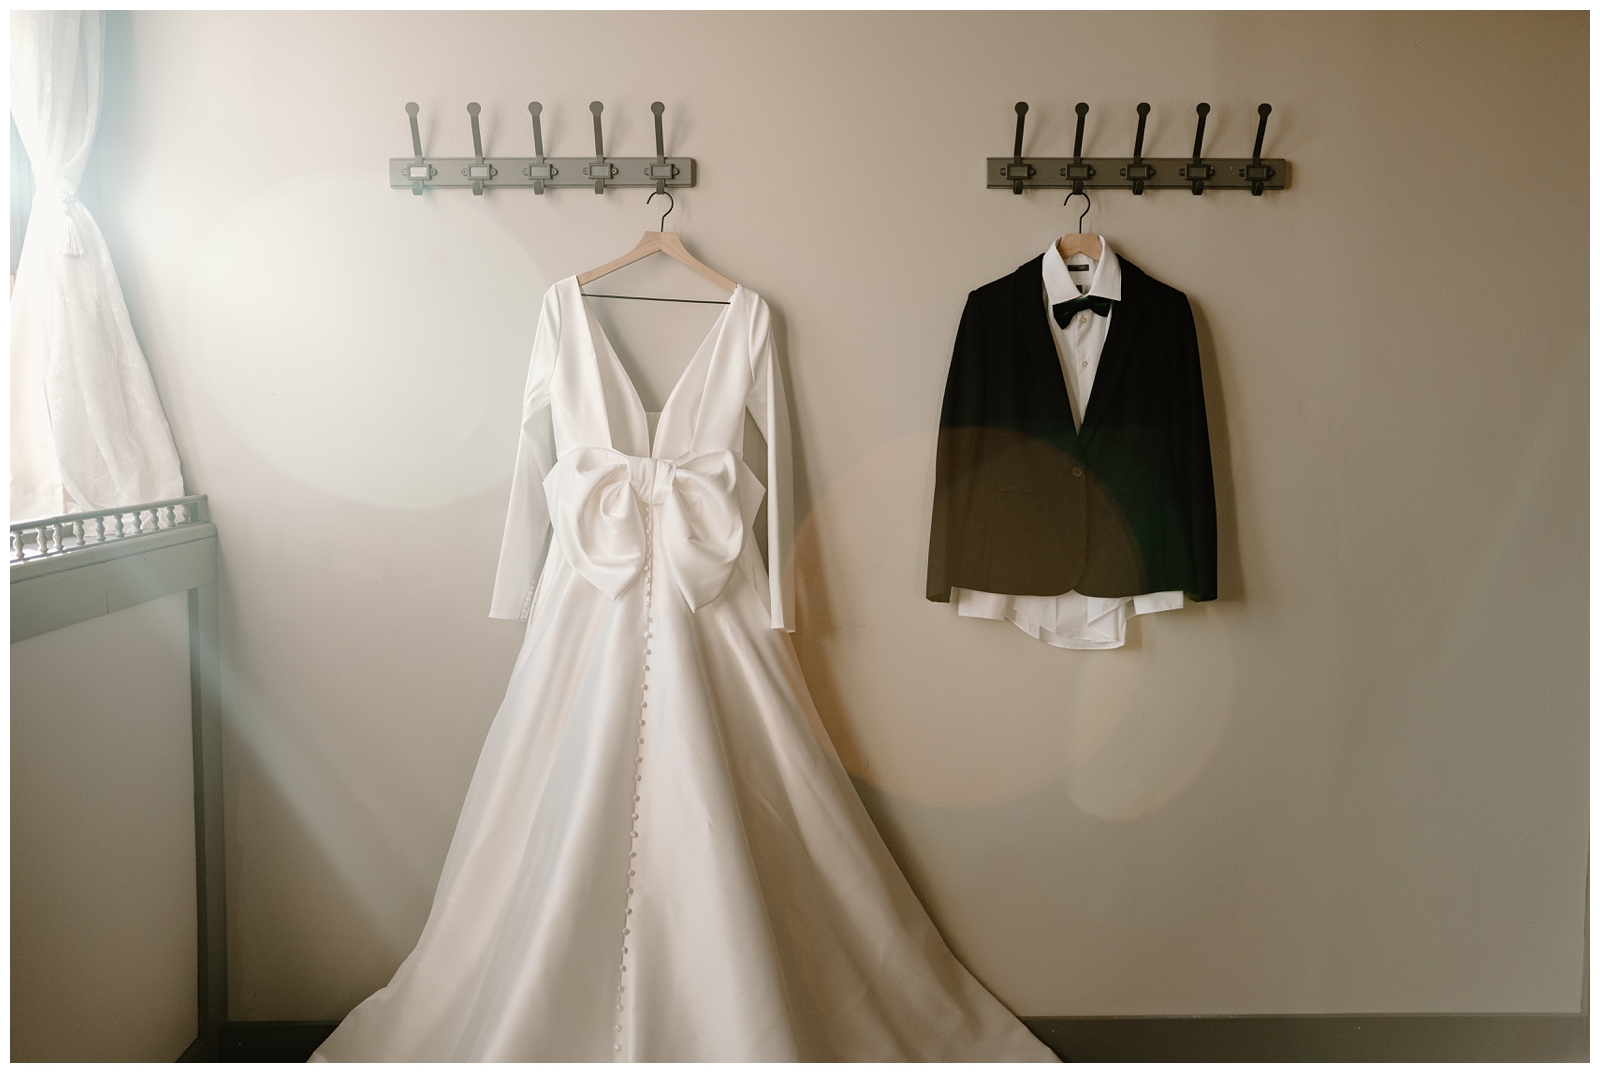 Hanging wedding dress and tux at this North Carolina same-sex elopement